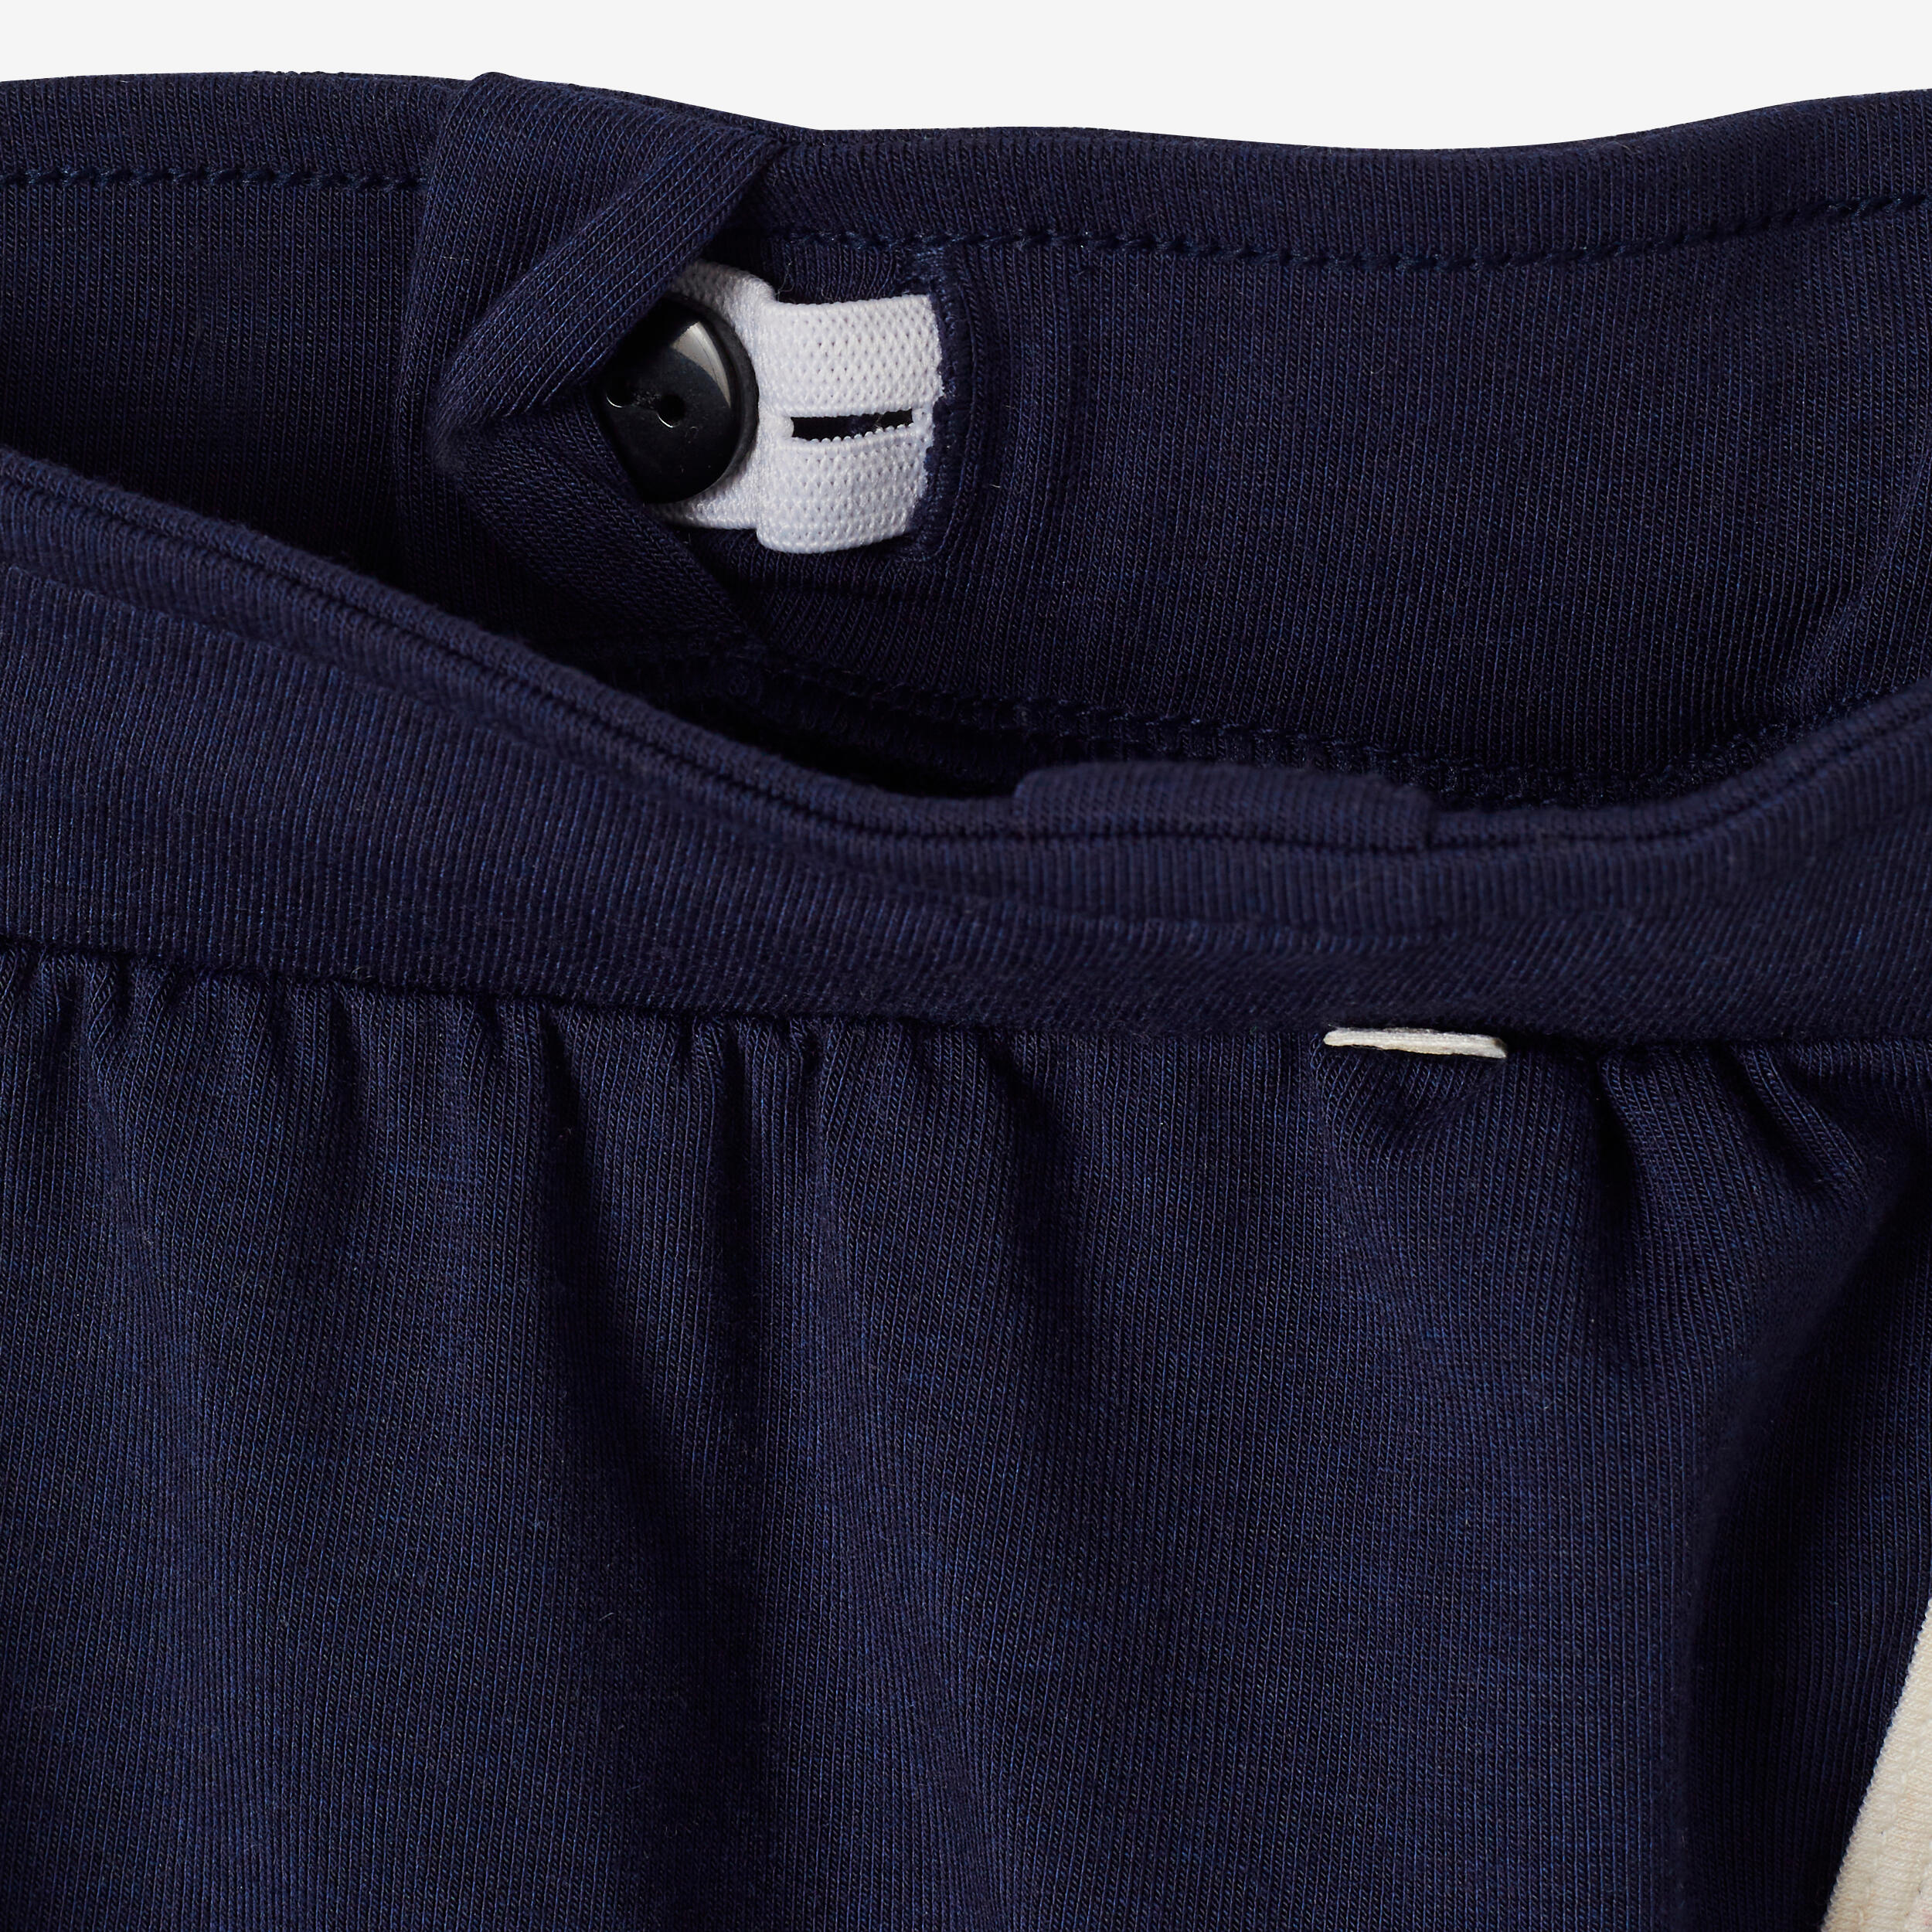 Kids' Breathable Adjustable Shorts 500 - Navy Blue 5/9